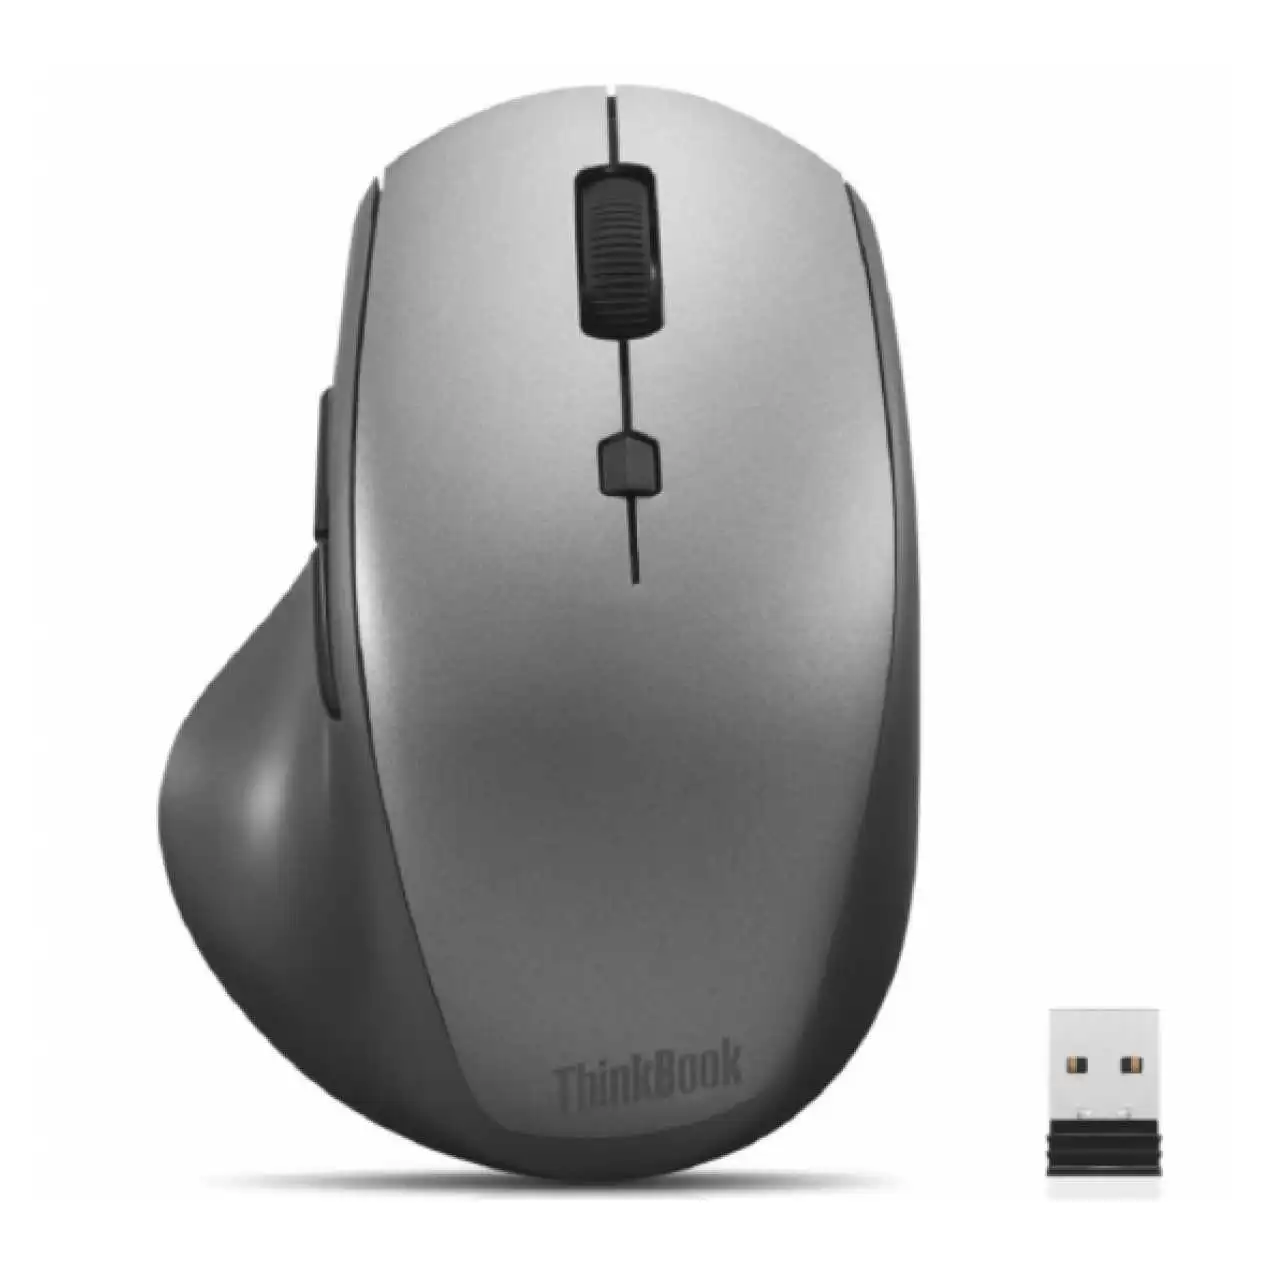 lenovo-thInkbook-kablosuz-mouse-4y50v81591-ürün-resmi-thumbnail